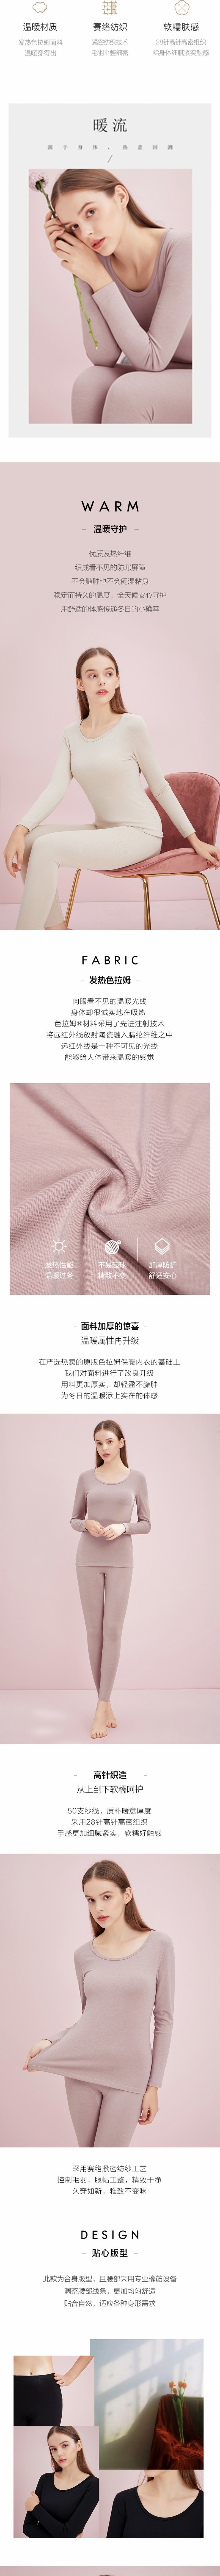 Lifease Women's Thermal Underwear Set 2.0 Apricot Large